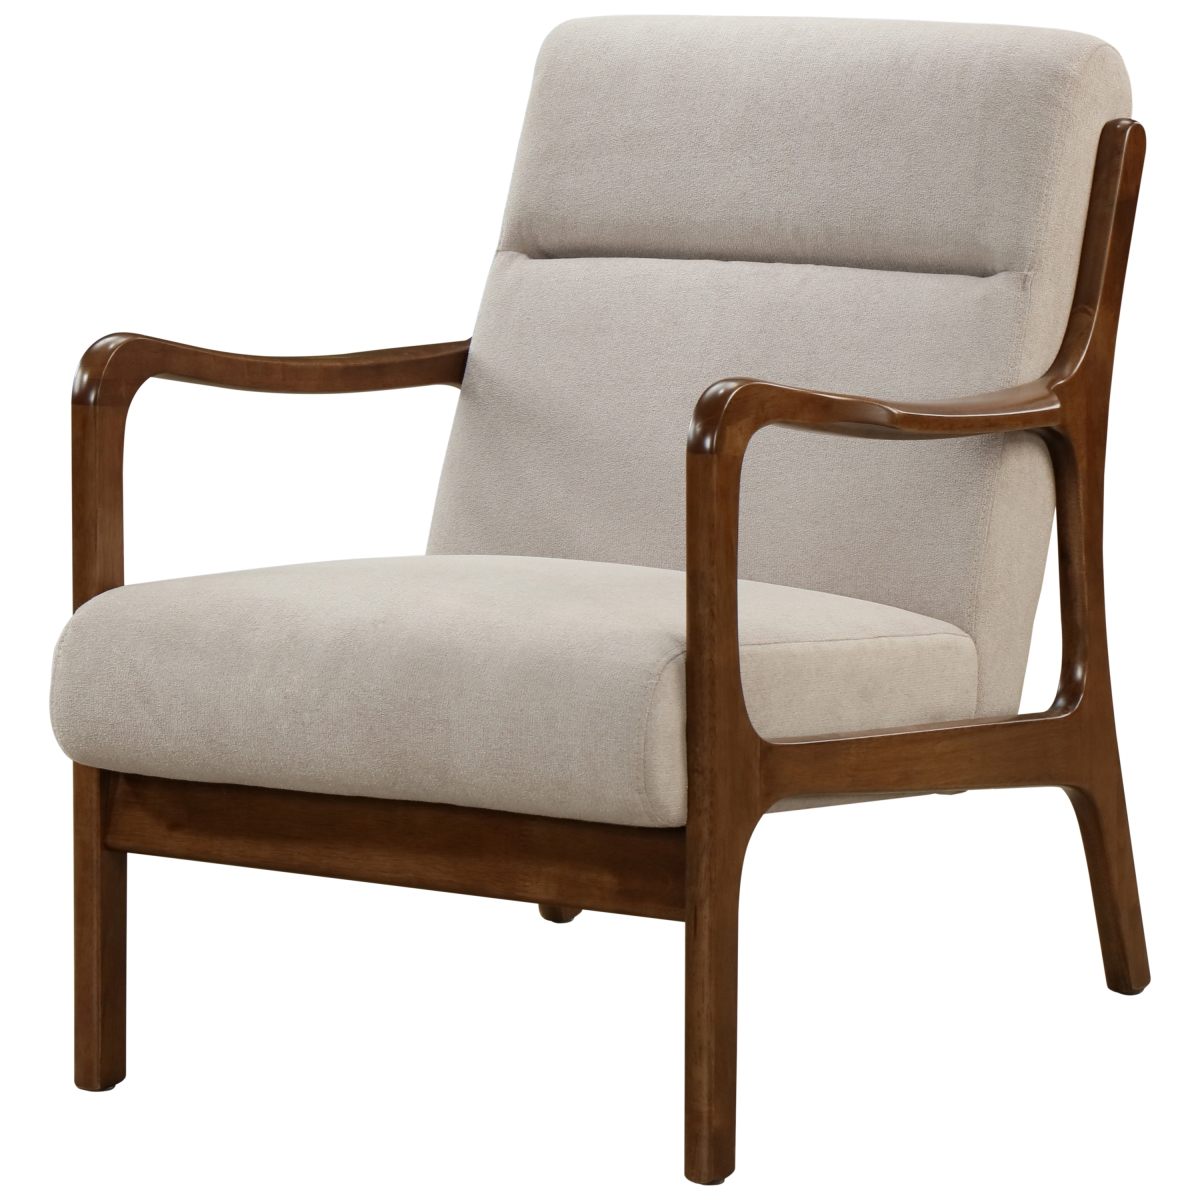 1320004-503 31.50 X 32 X 15 In. Anton Arm Chair, Studio Ight Brown